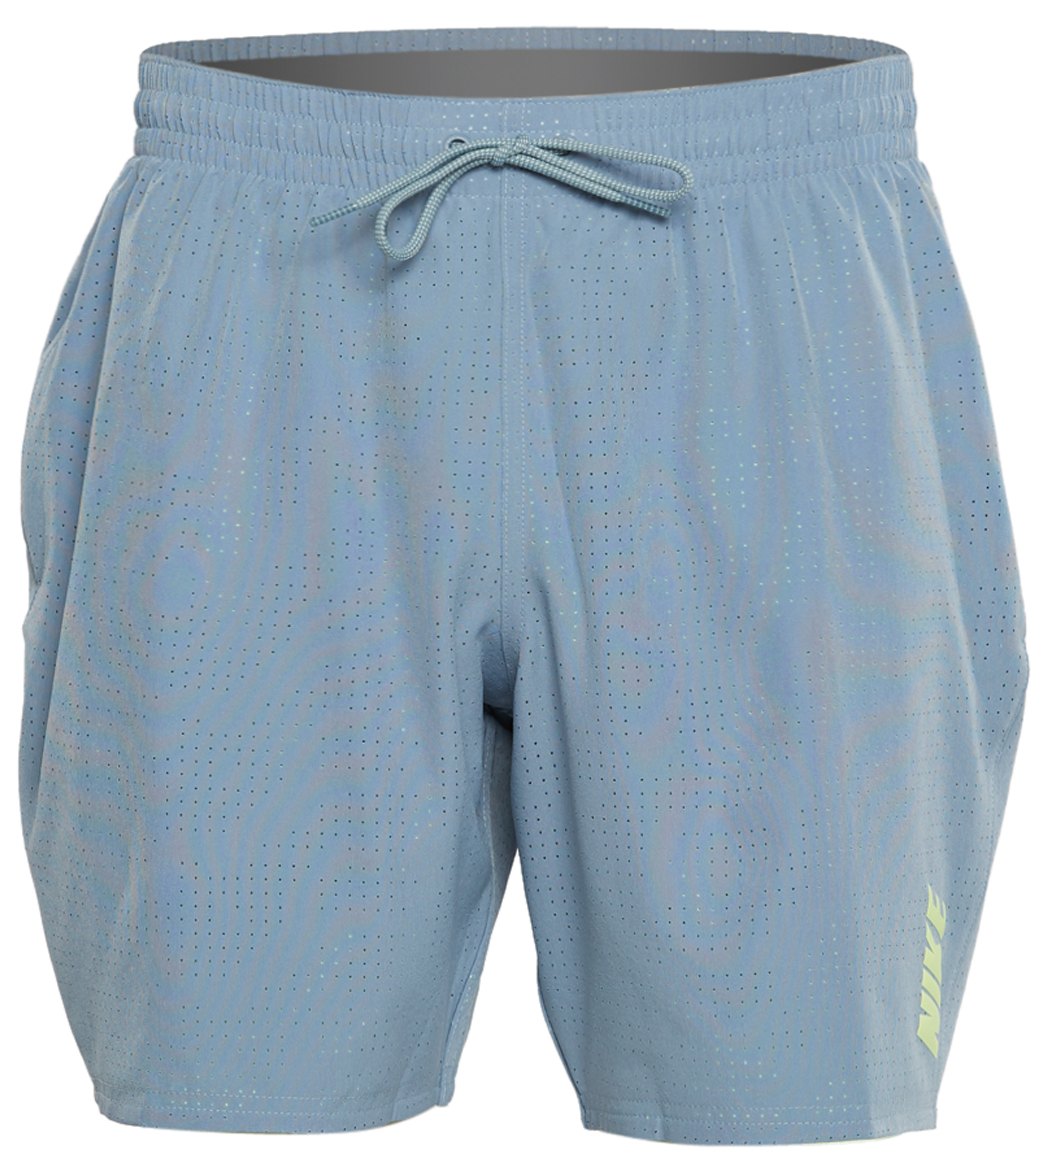 Nike Men's 18 Optic Camo Mesh Reversible Volley Shorts - Indigo Fog Small Polyester - Swimoutlet.com